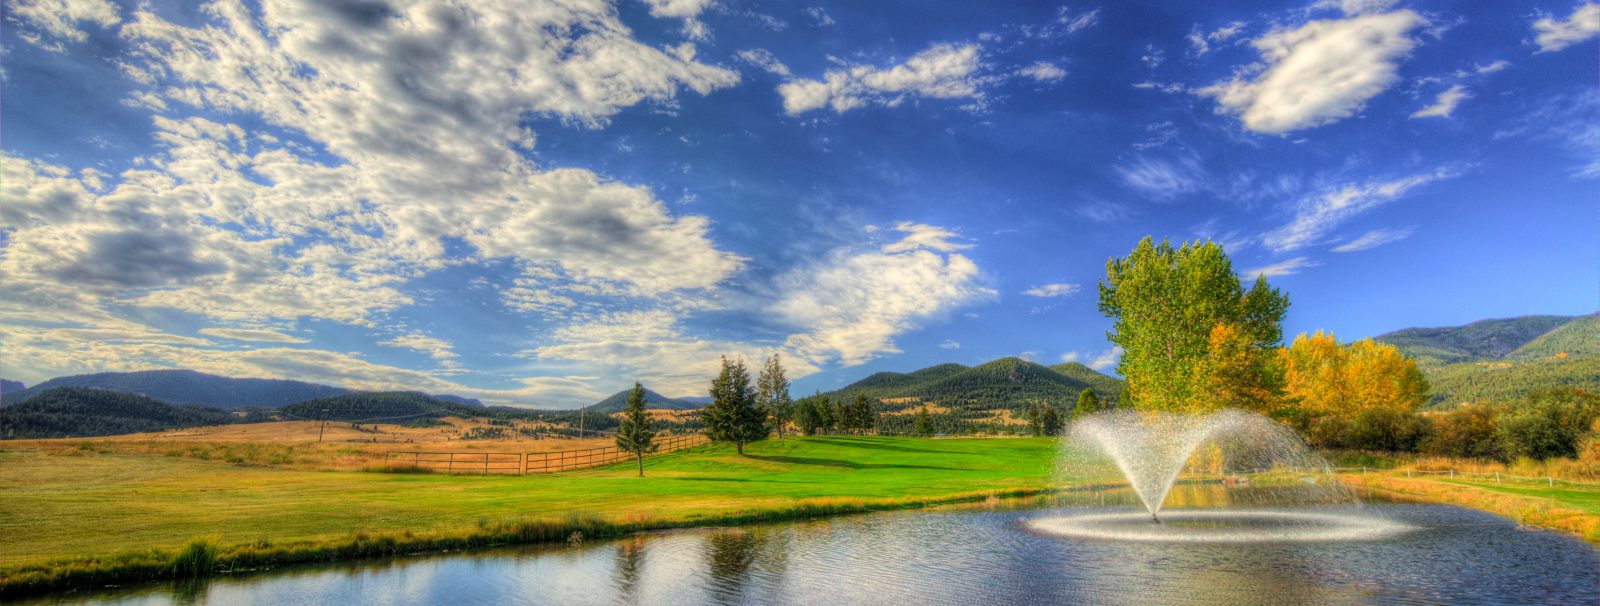 Golf at Fairmont Hot Springs Resort